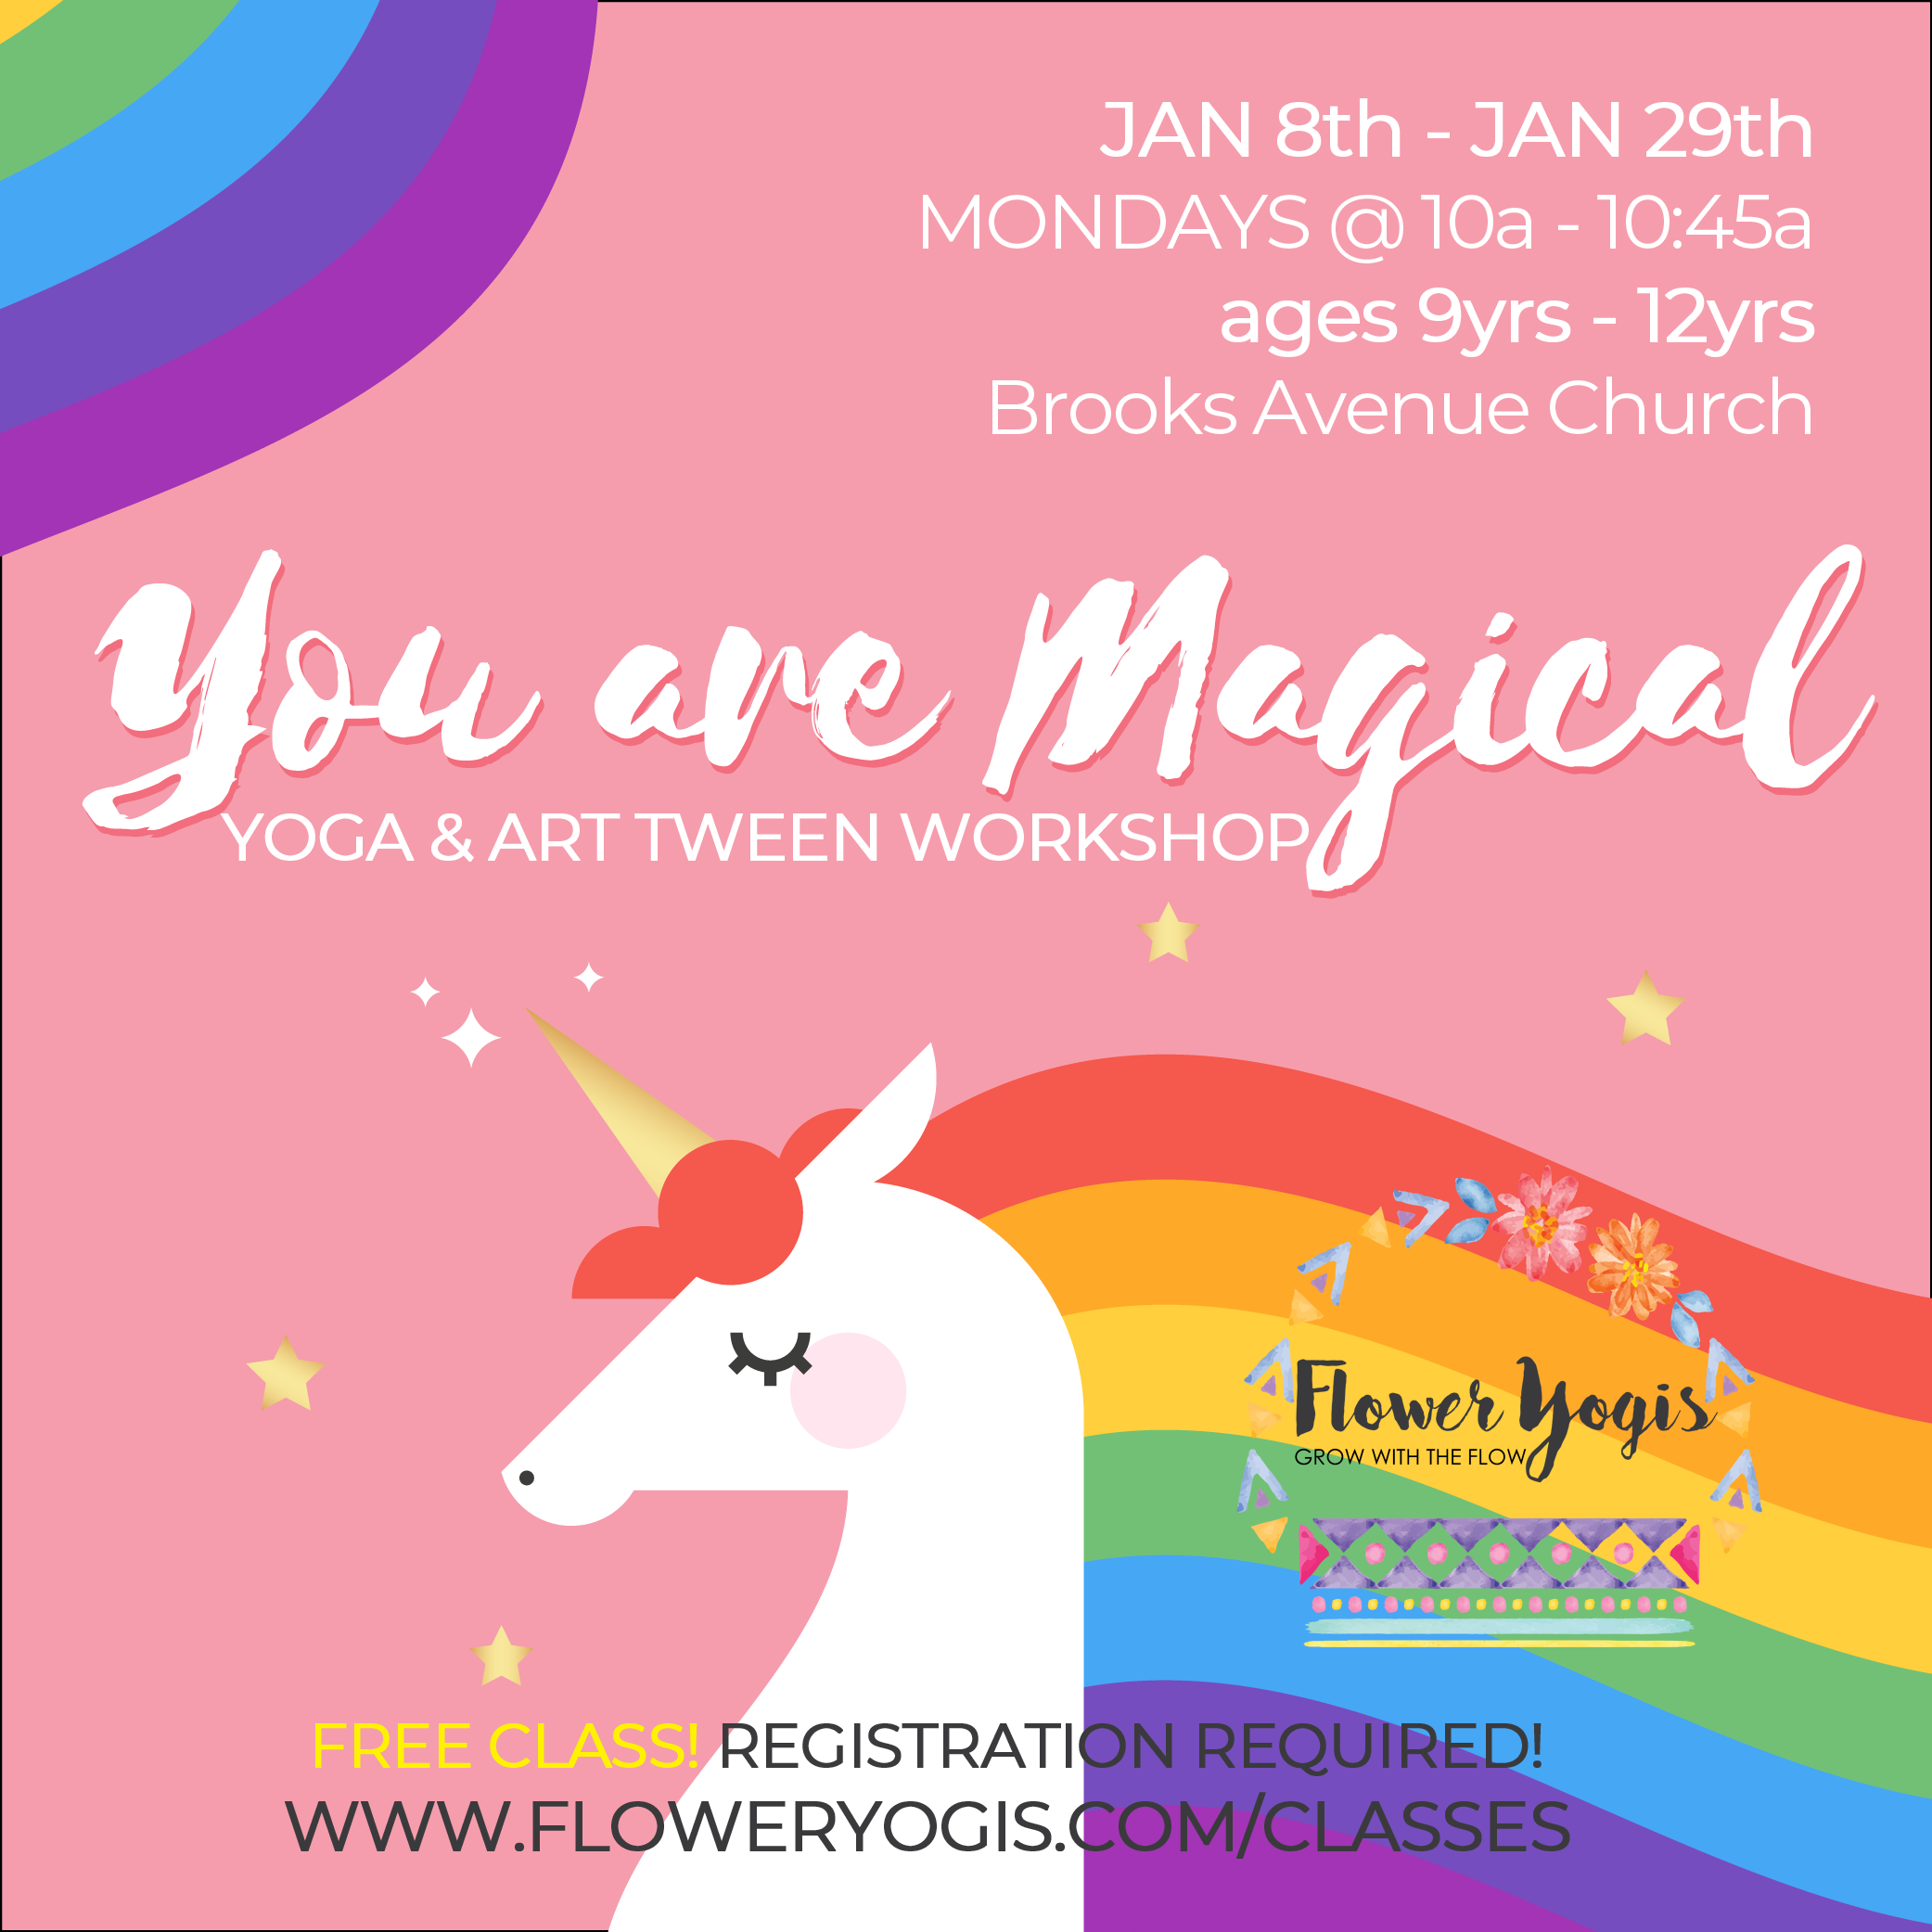 YOU ARE MAGICAL 4 week Yoga & Art Tween Workshop